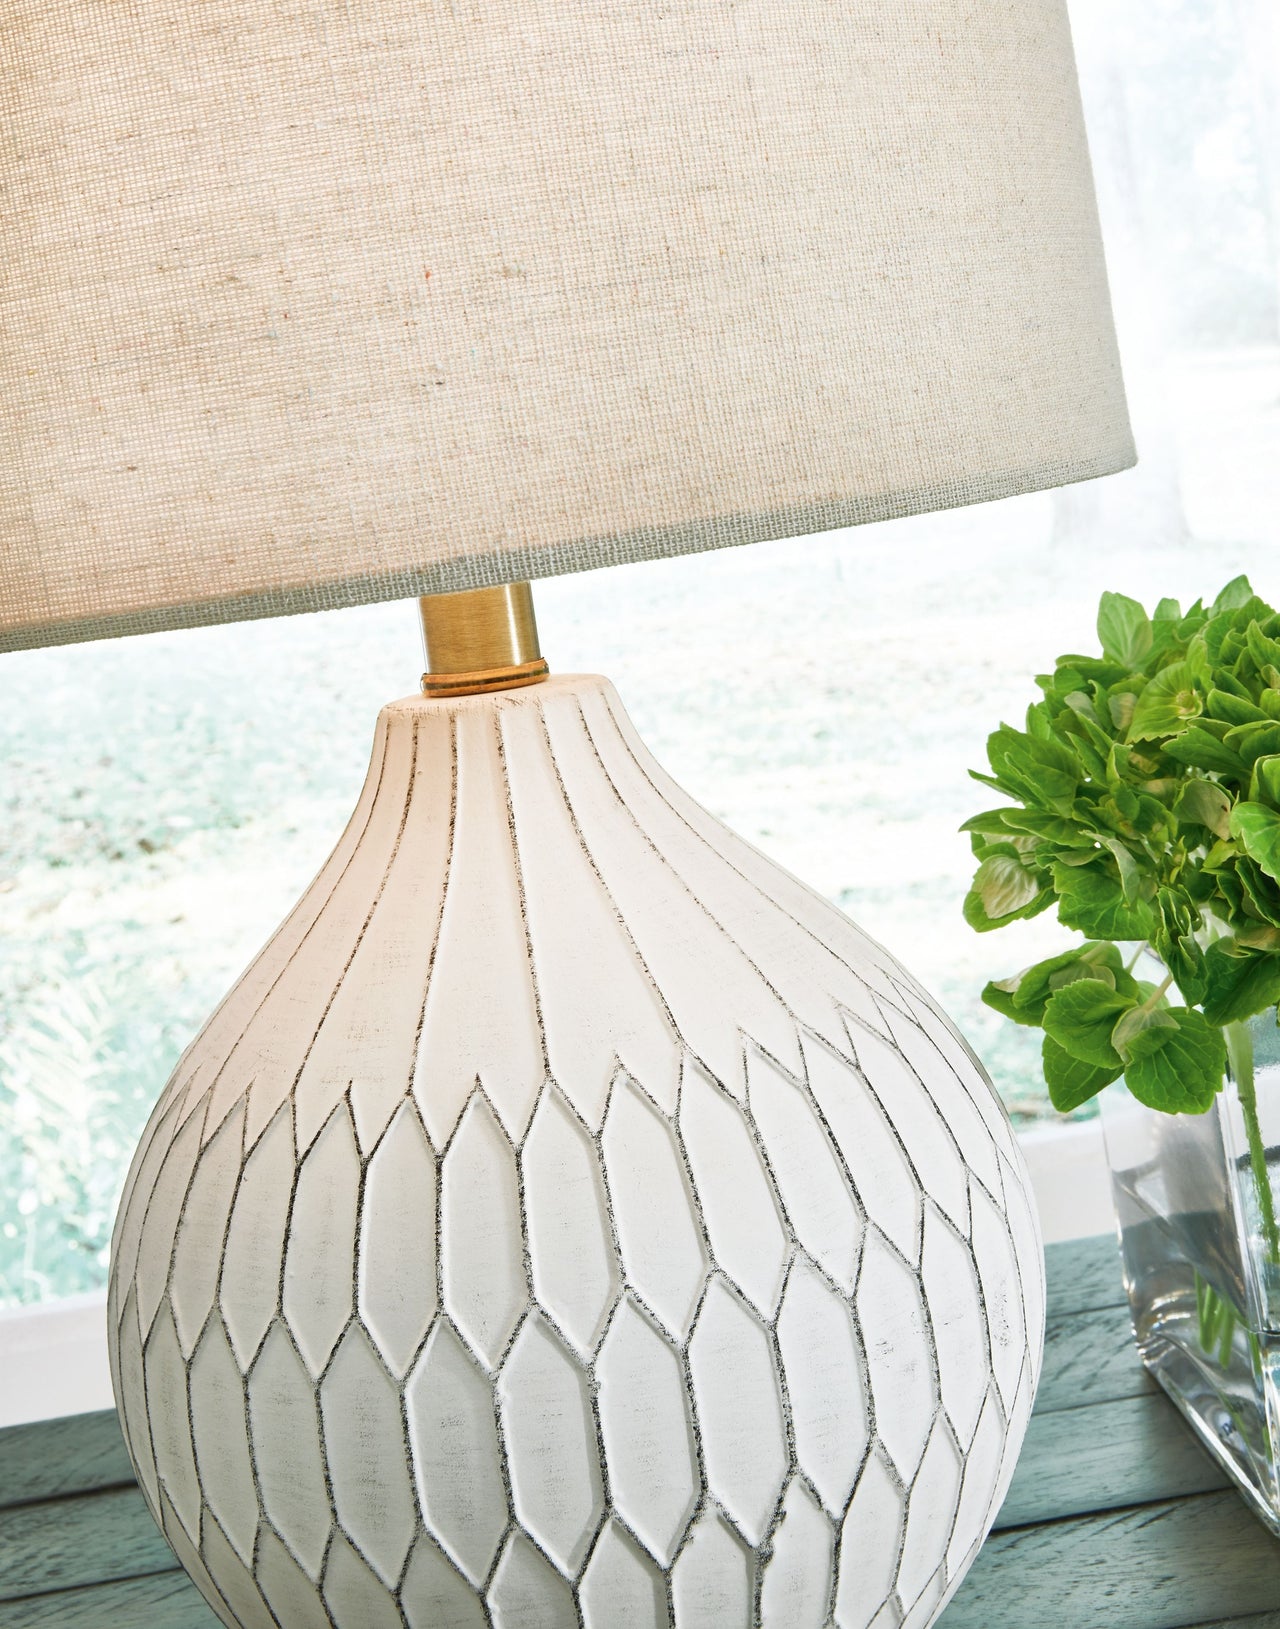 Wardmont - White - Ceramic Table Lamp - Tony's Home Furnishings